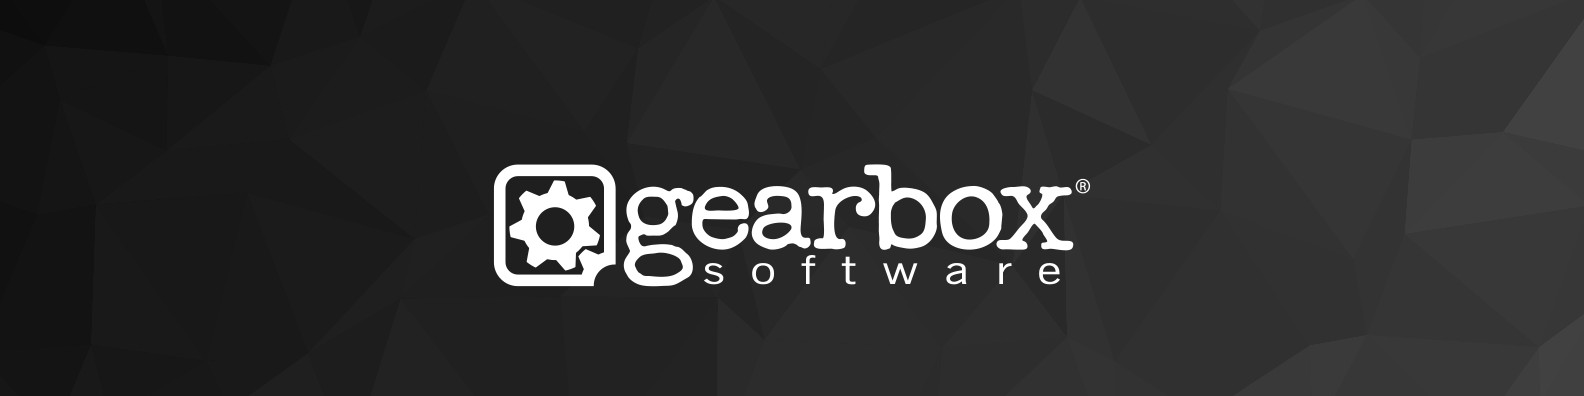 𹫾Ȩ鲻 Gearbox3D Realms